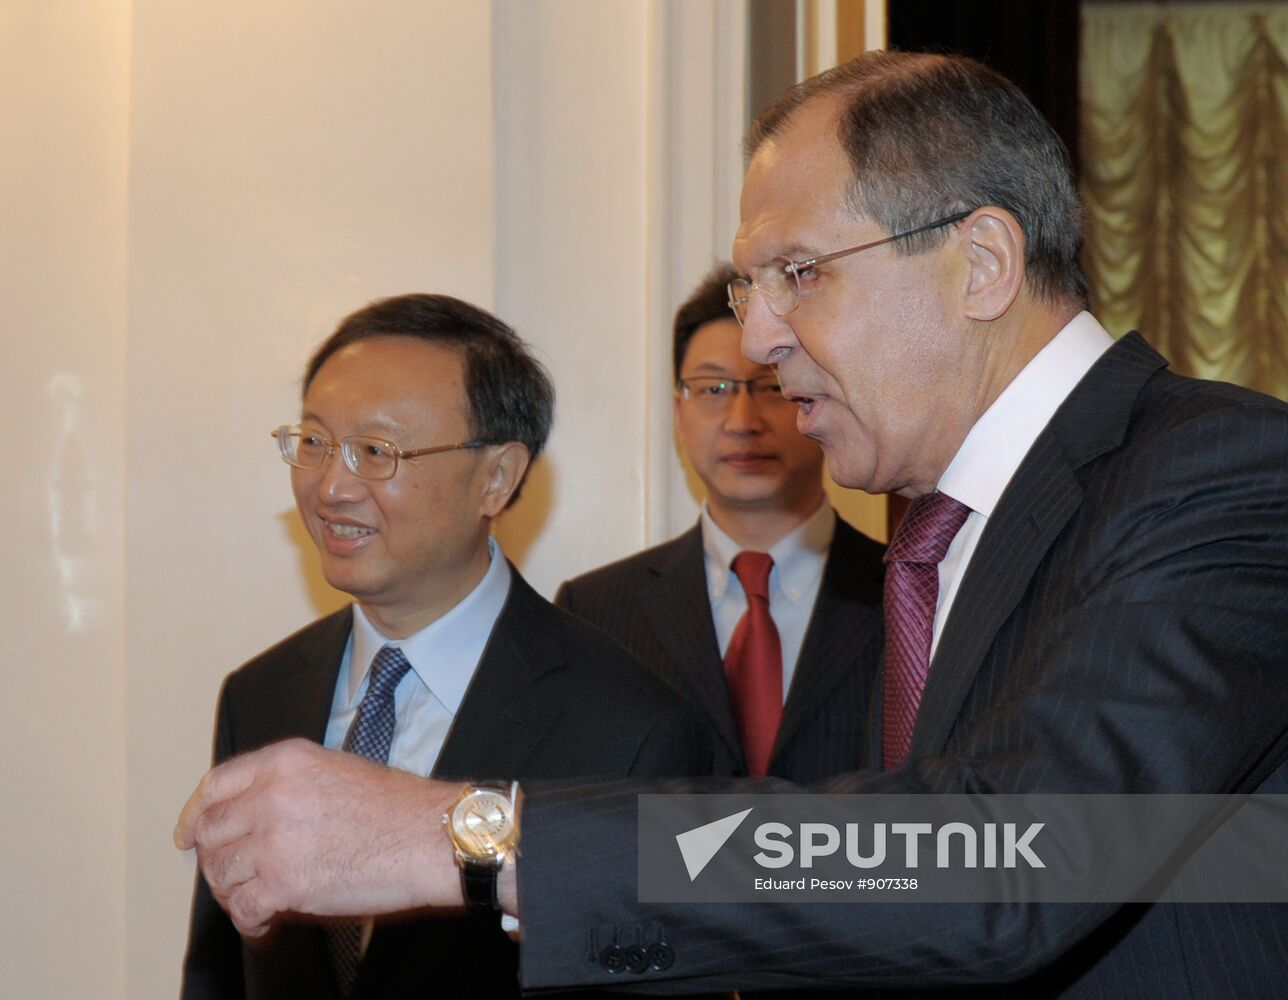 Sergei Lavrov meets Yang Jiechi